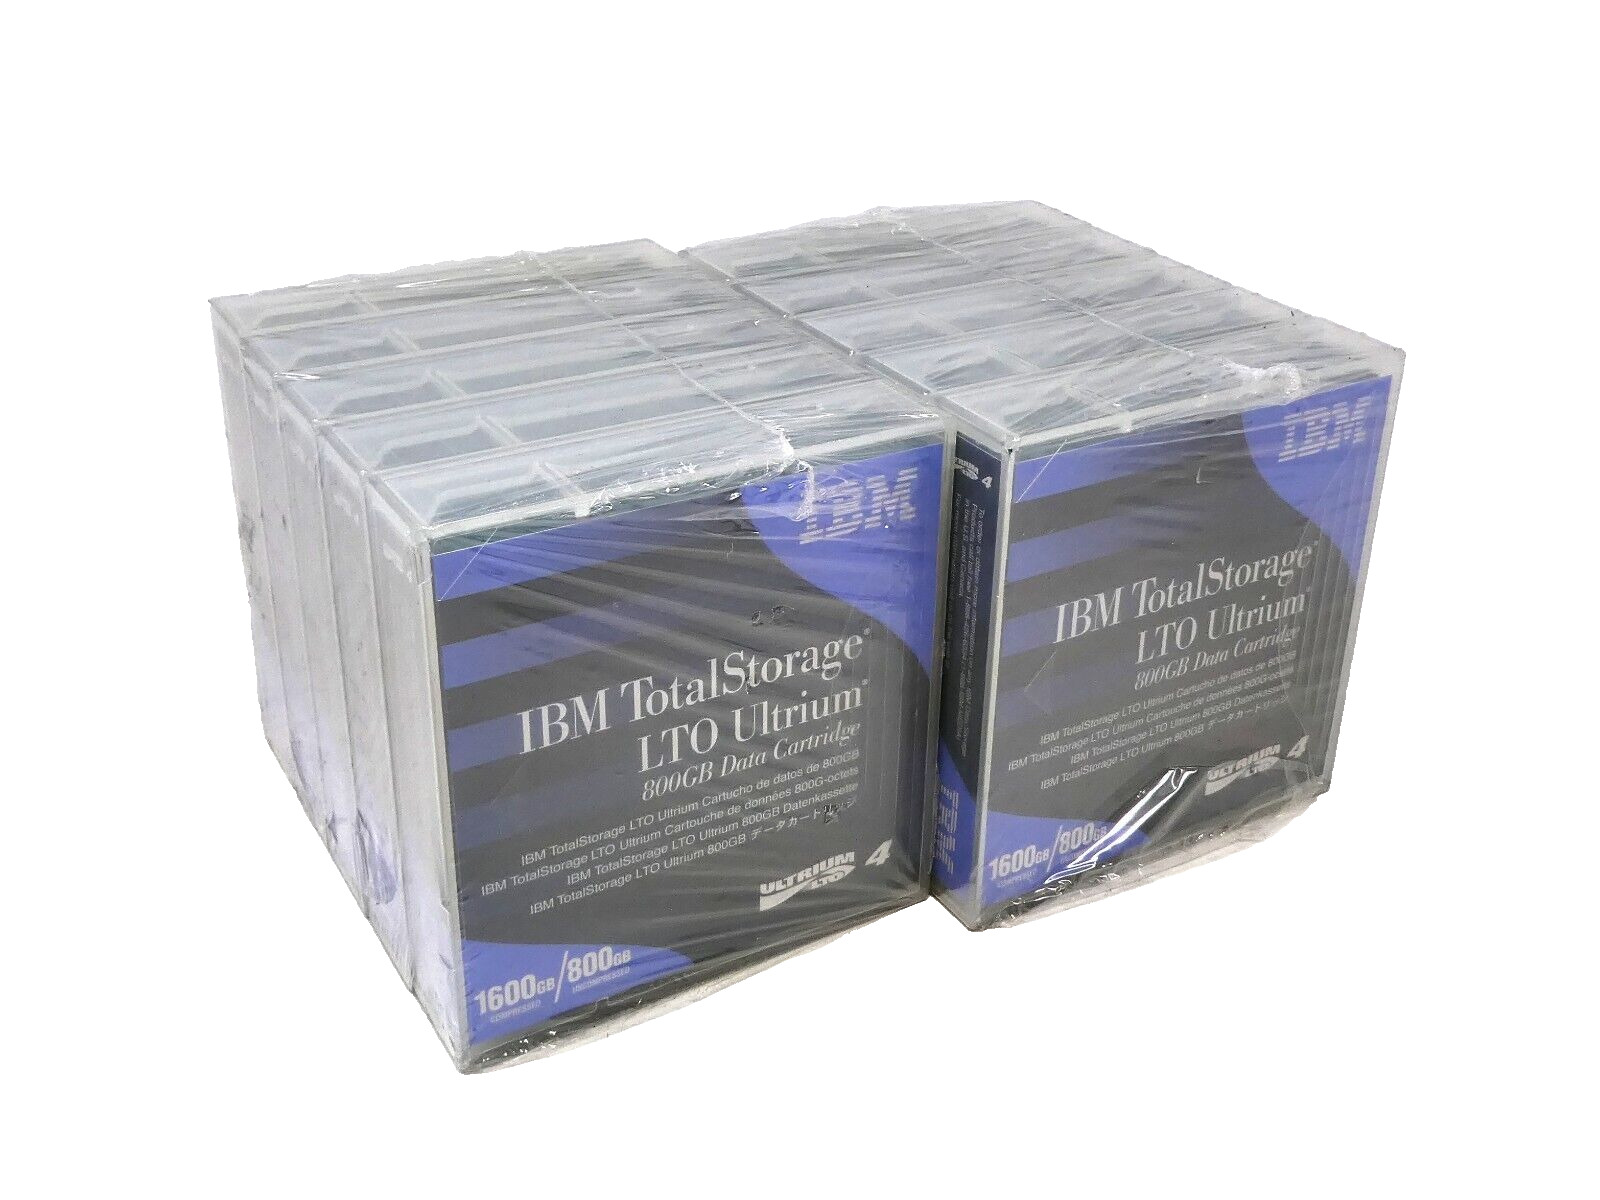 Lot of 2 Packs of 5 (10) IBM TotalStorage LTO-4 Ultrium Cartridge Tape - 95P4436